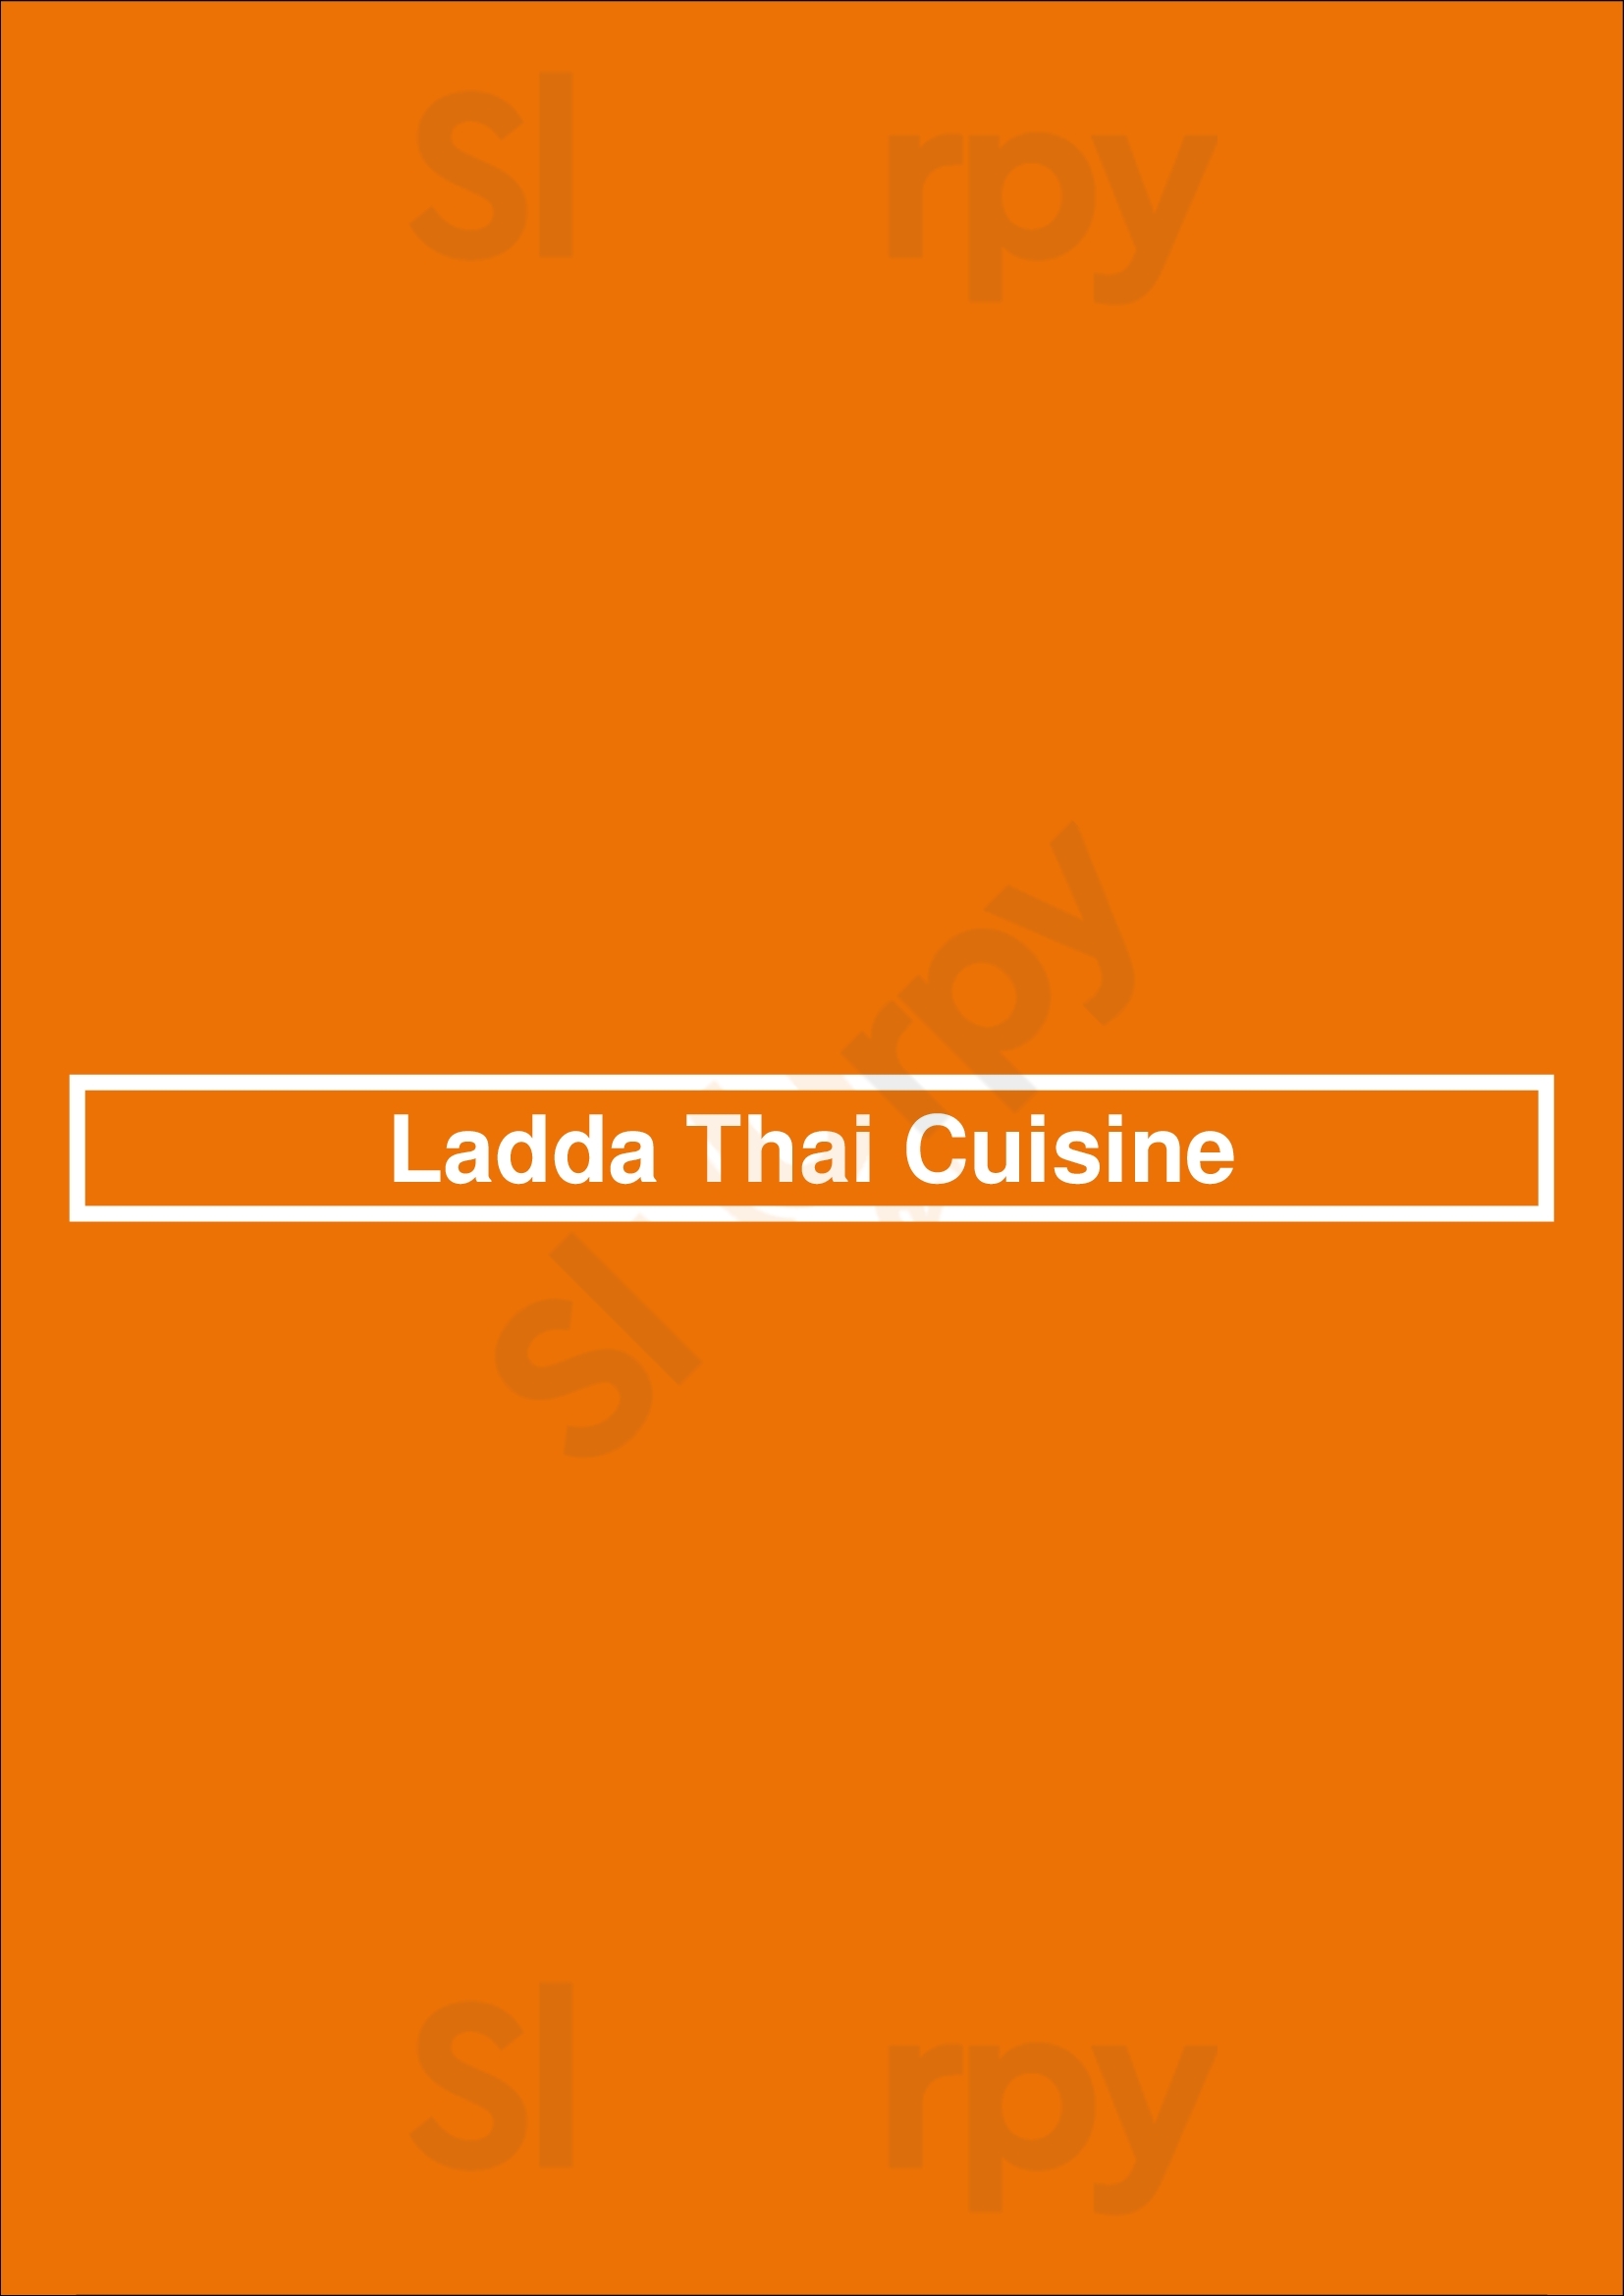 Ladda Thai Cuisine San Jose Menu - 1